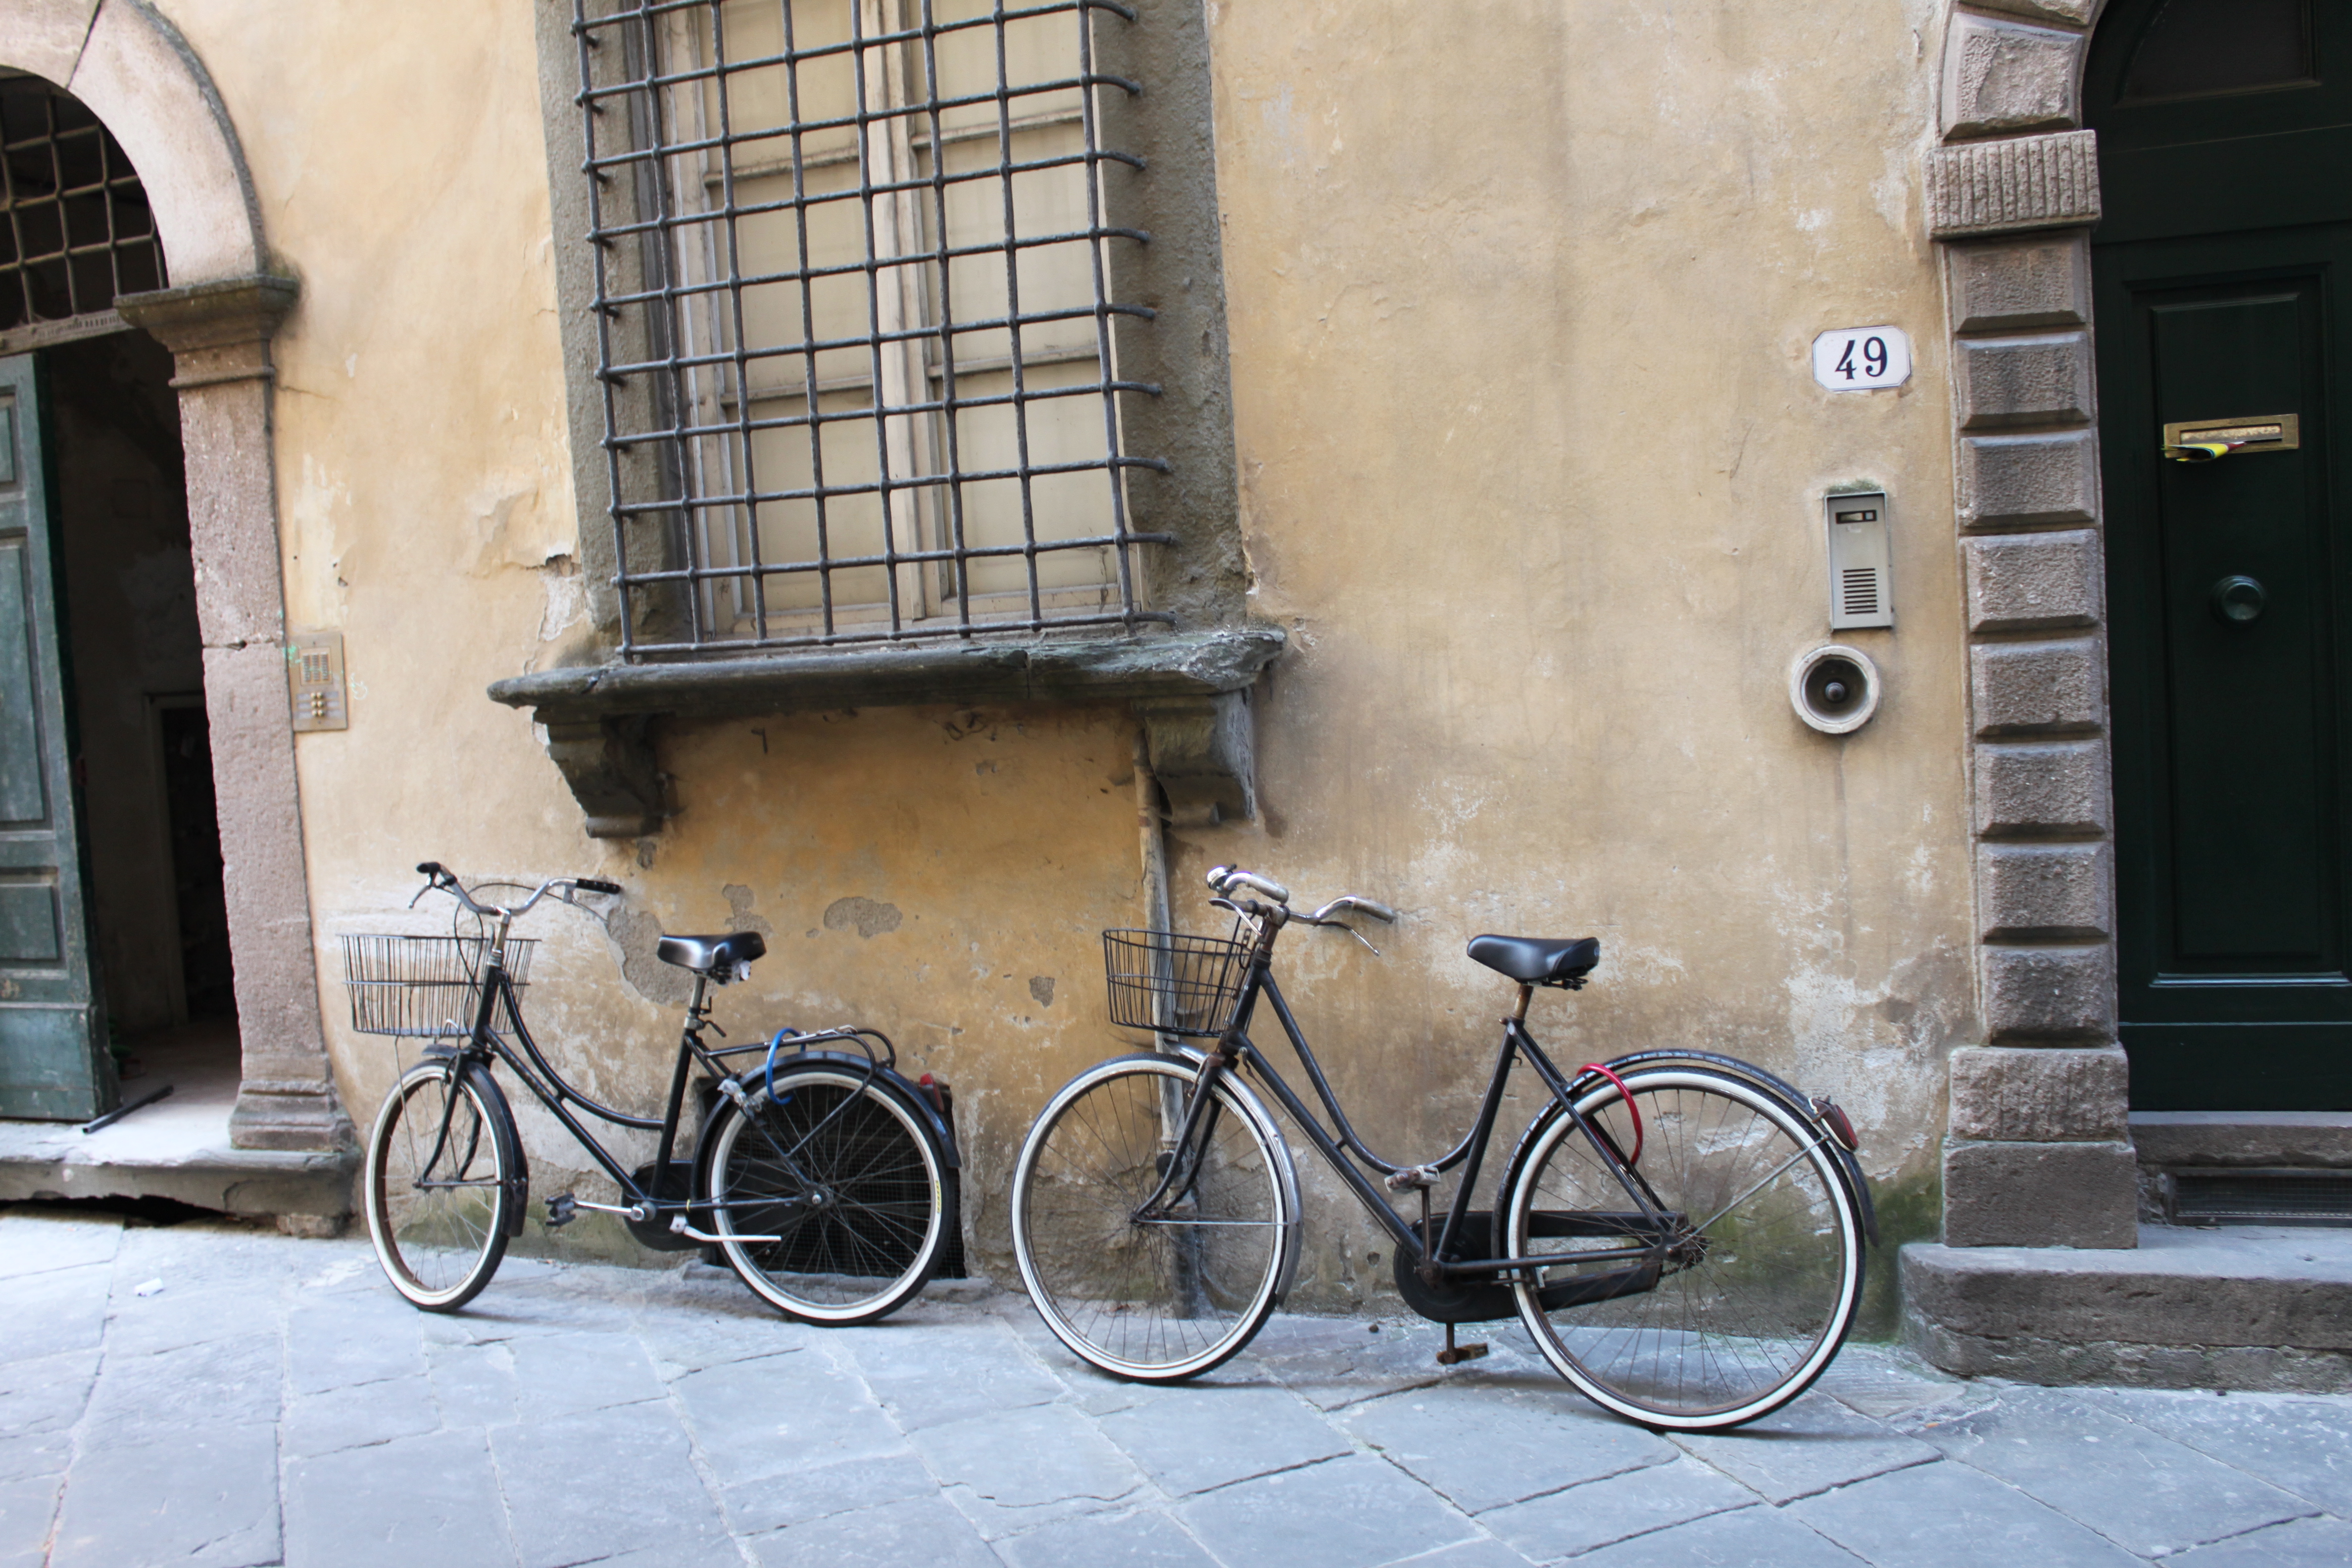 Bikes in Italy - bikes, bikes, everywhere!